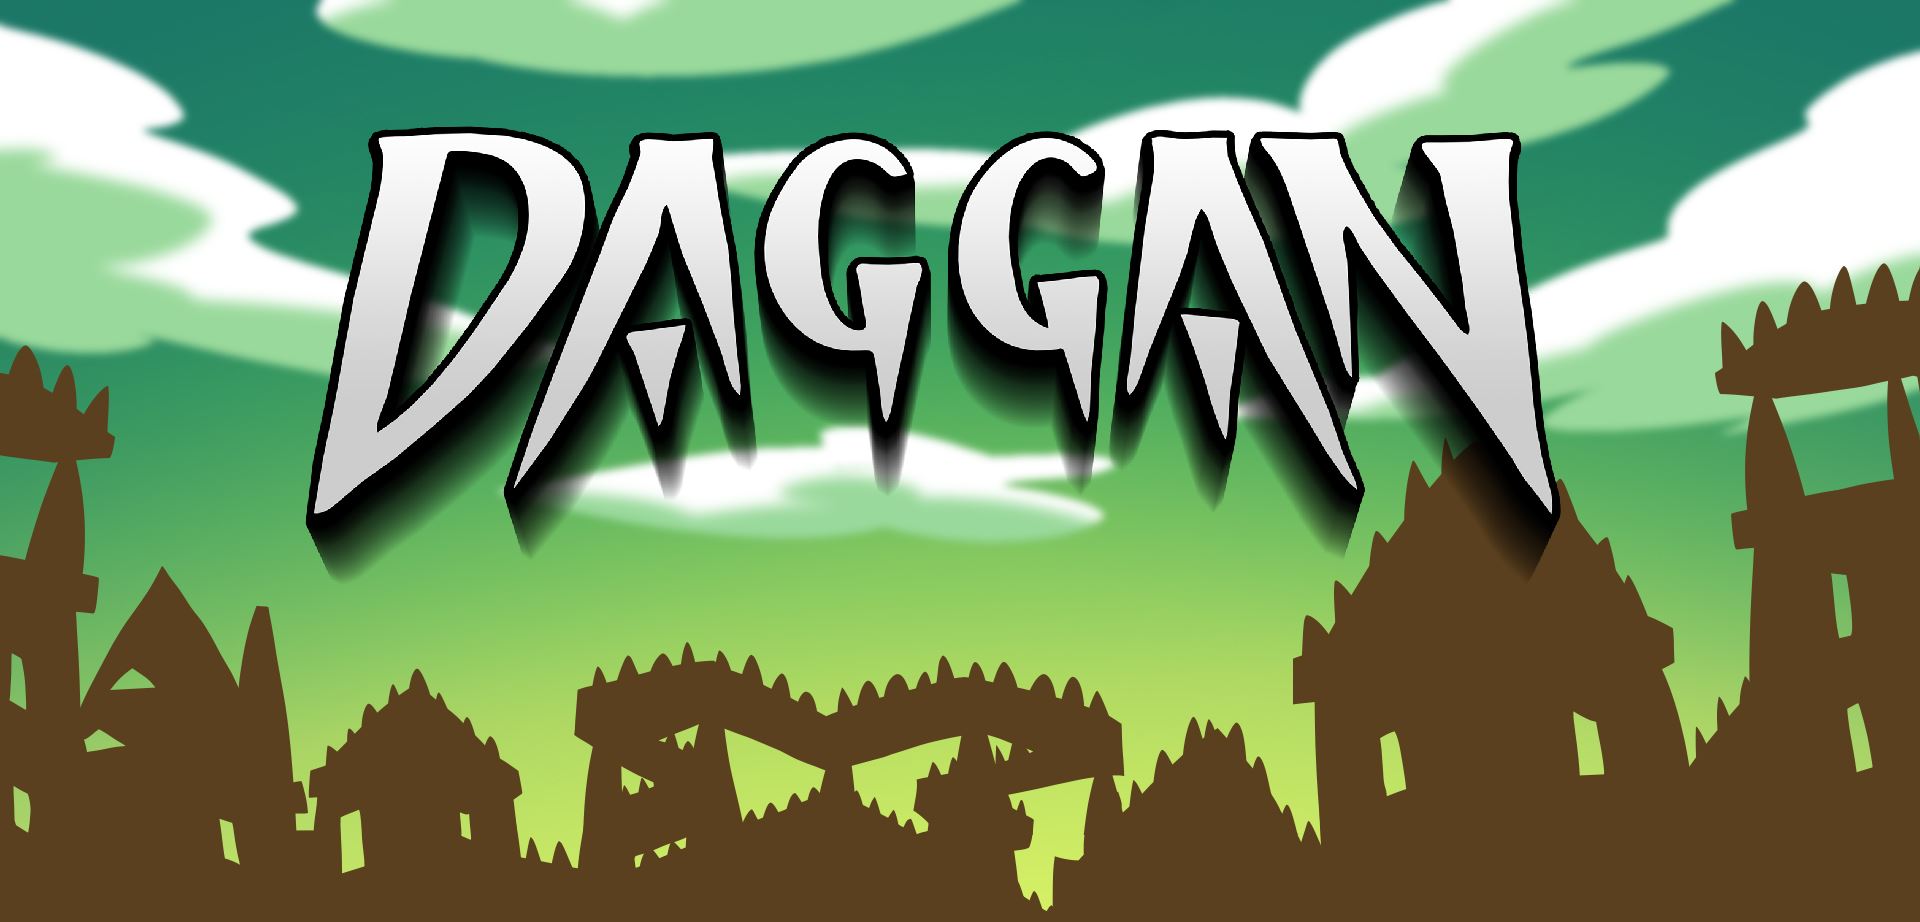 Daggan porn xxx game download cover